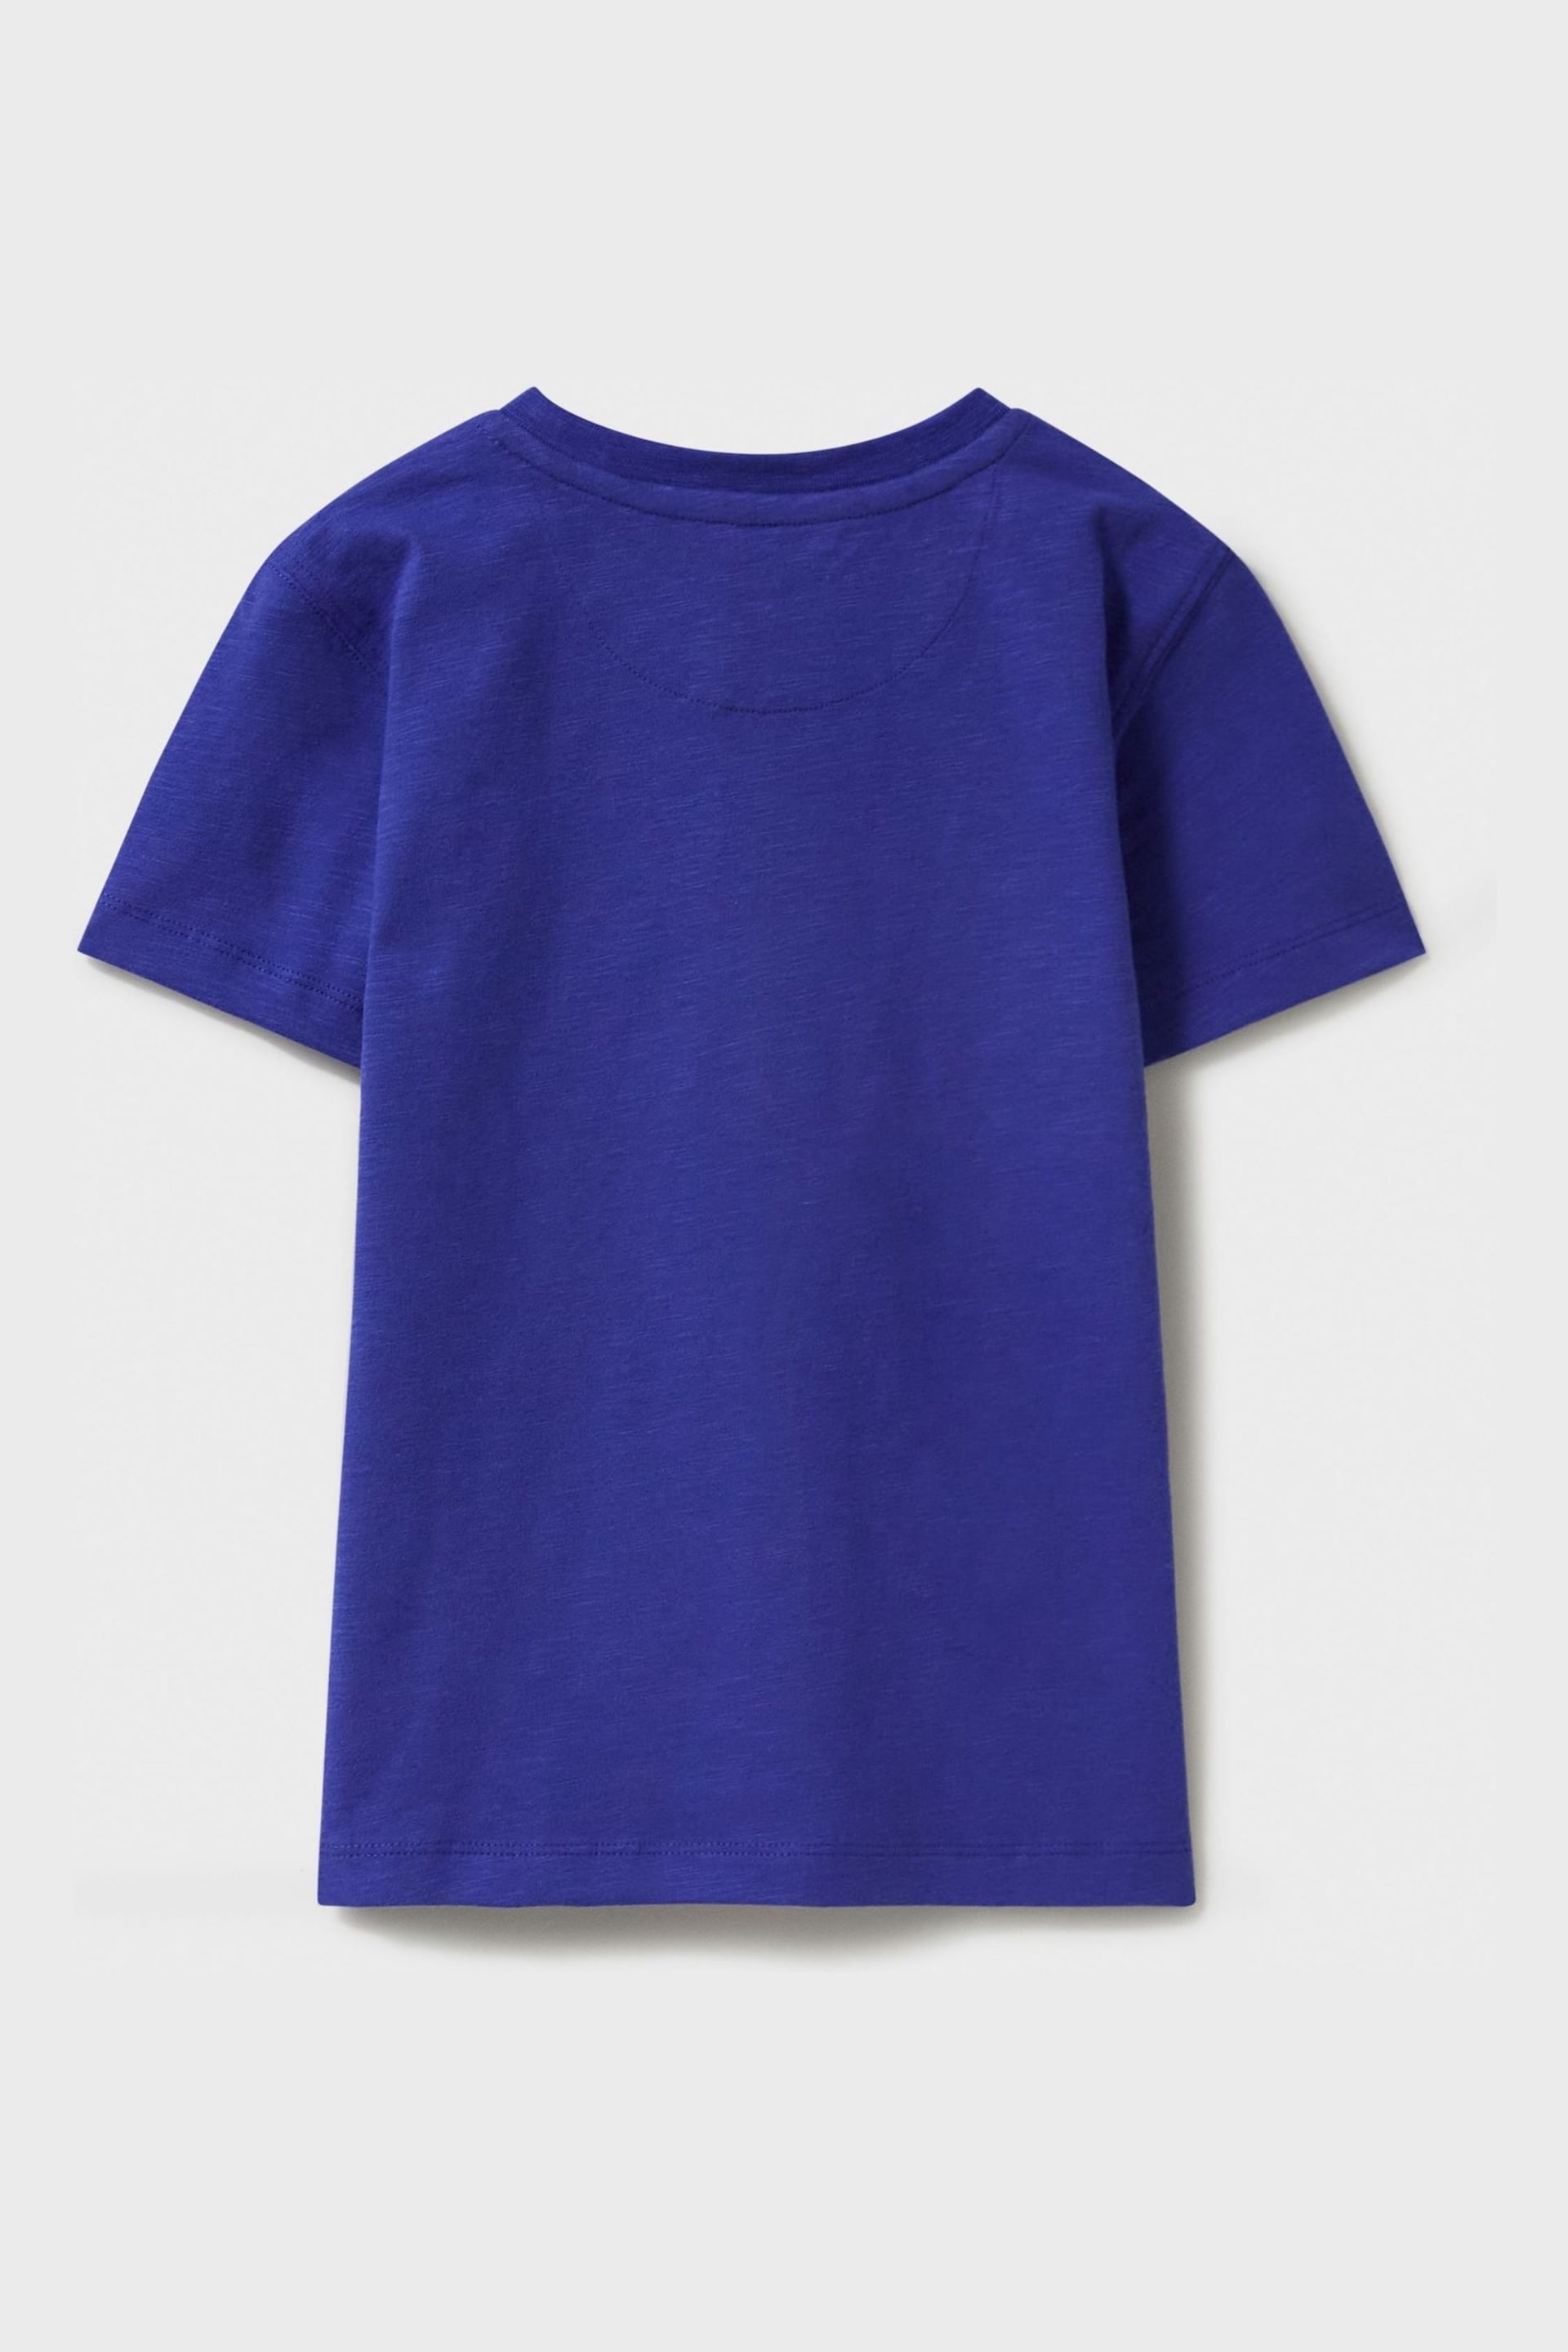 Crew Clothing Company Dark Blue Dinosaur Print Cotton Classic T-Shirt - Image 2 of 3